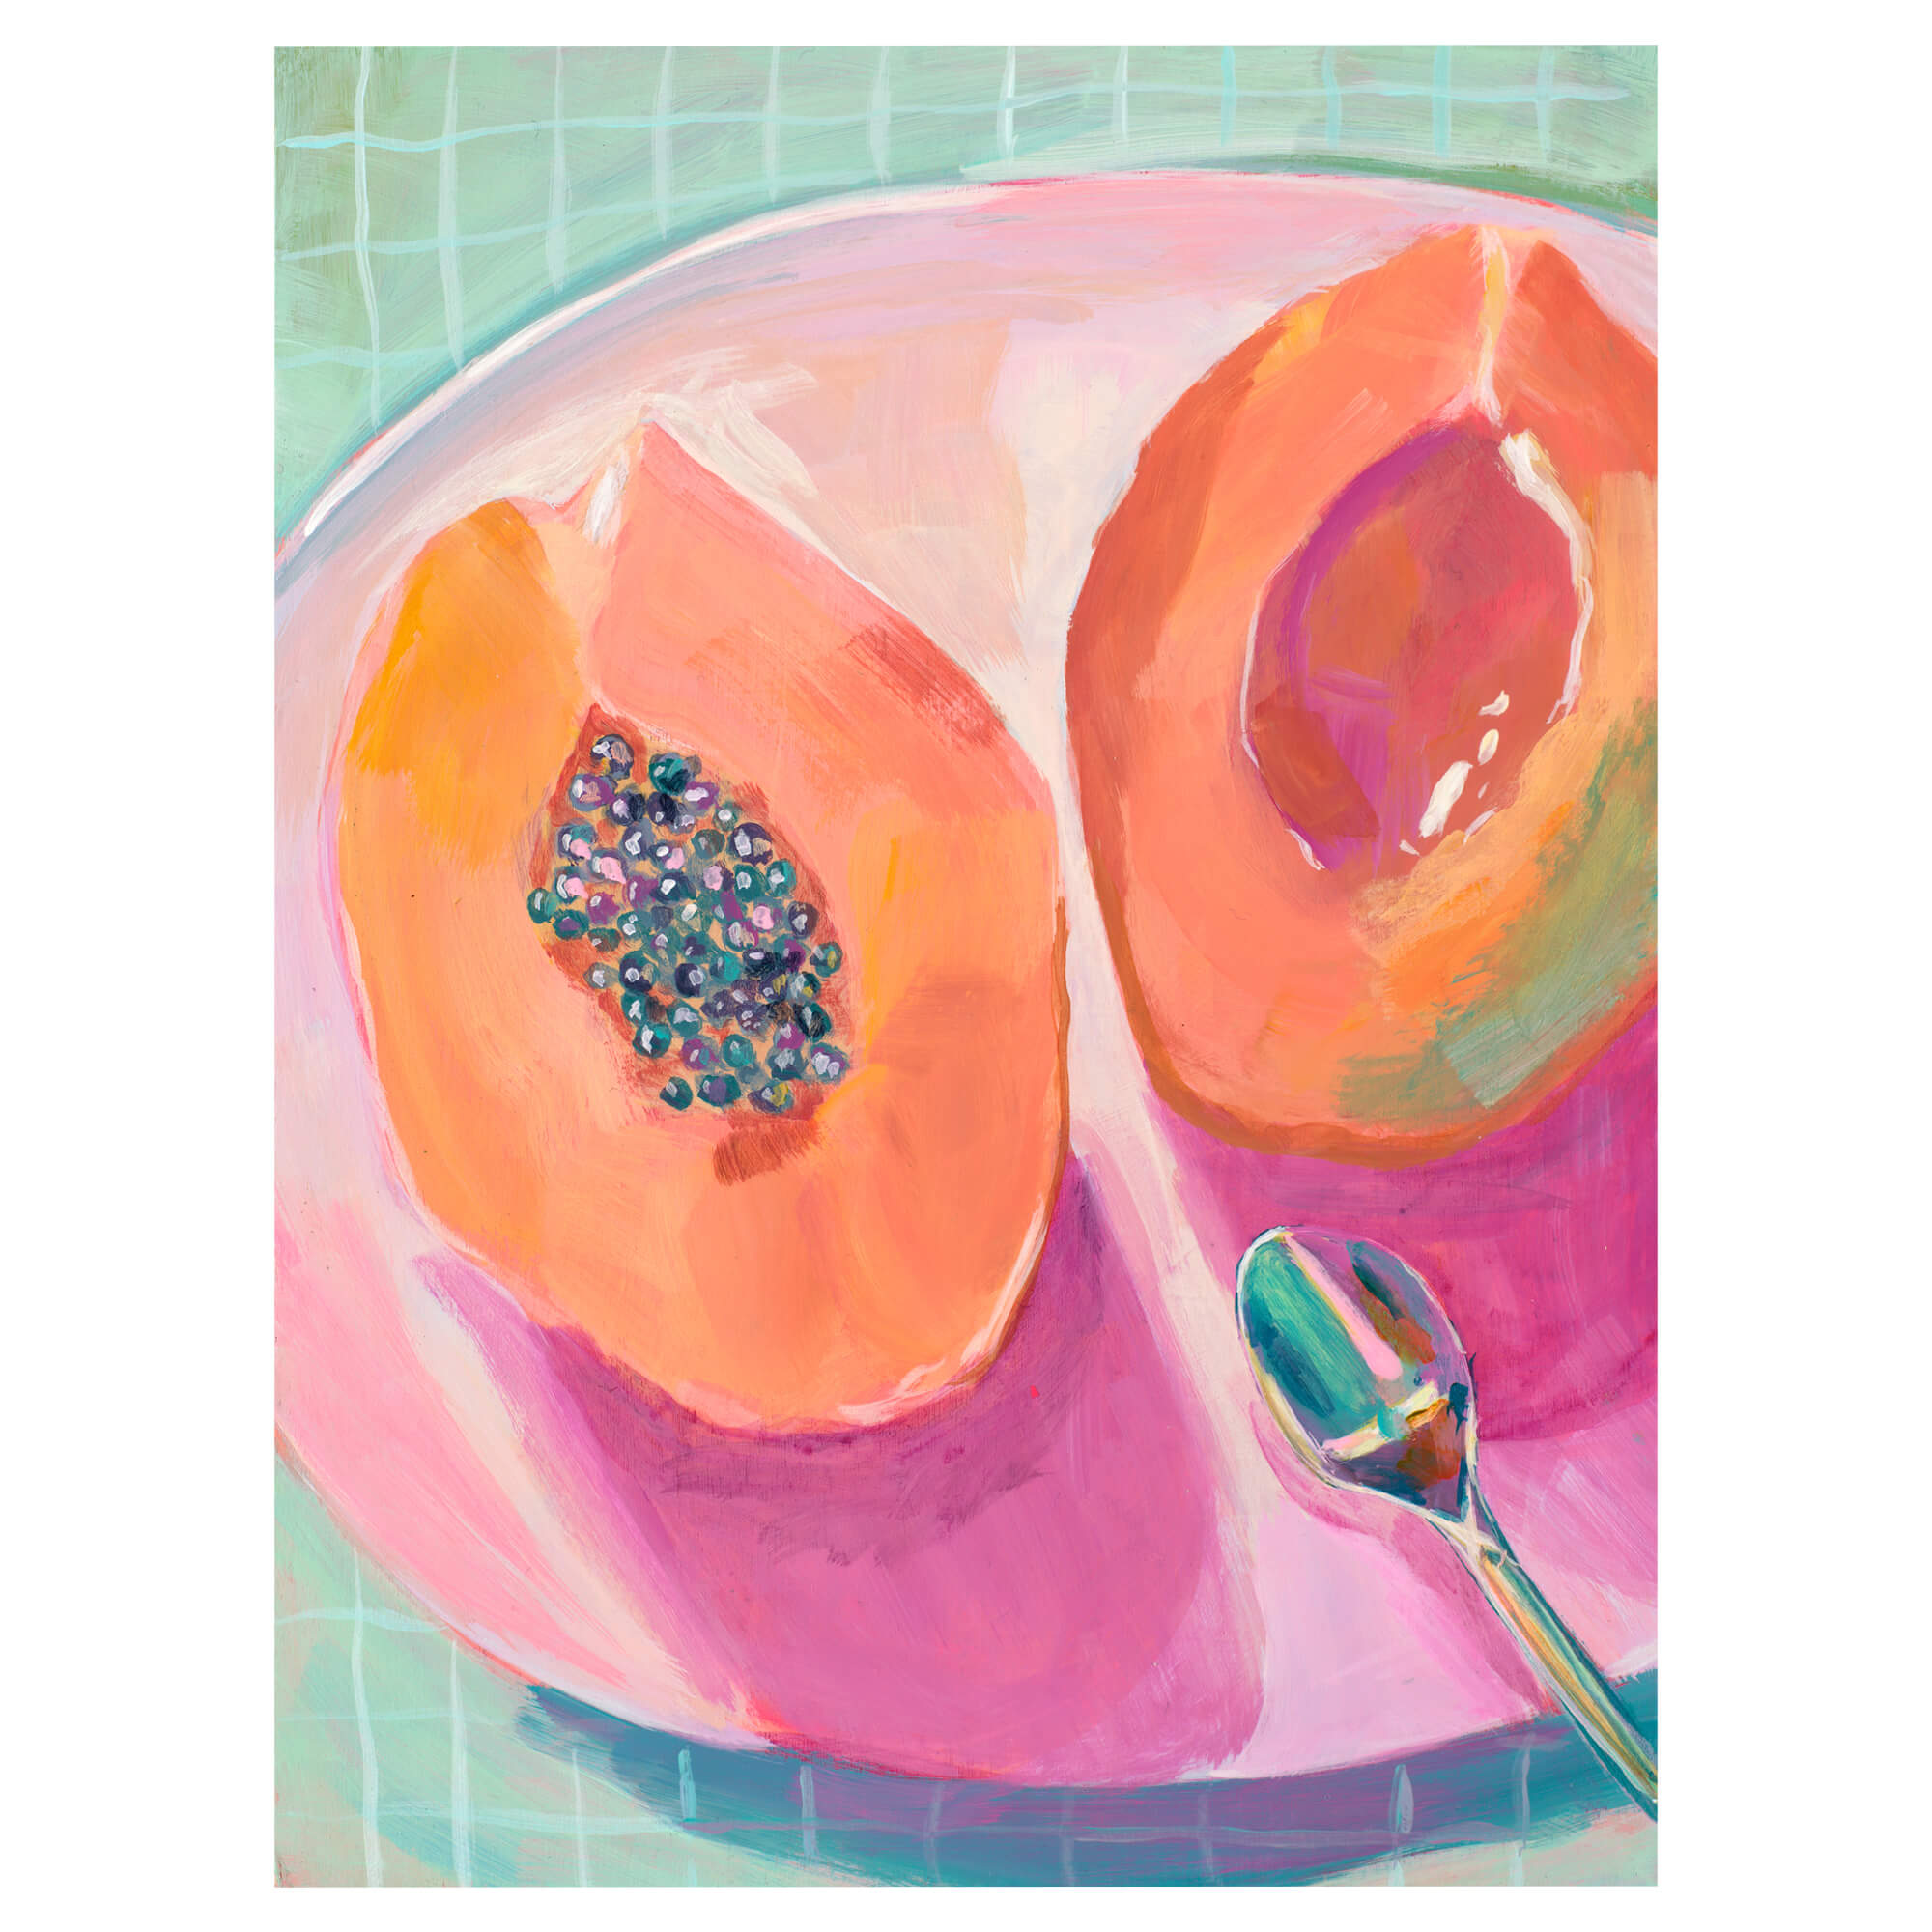 Vibrant depiction of a papaya fruit by Hawaii artist Lindsay Wilkins